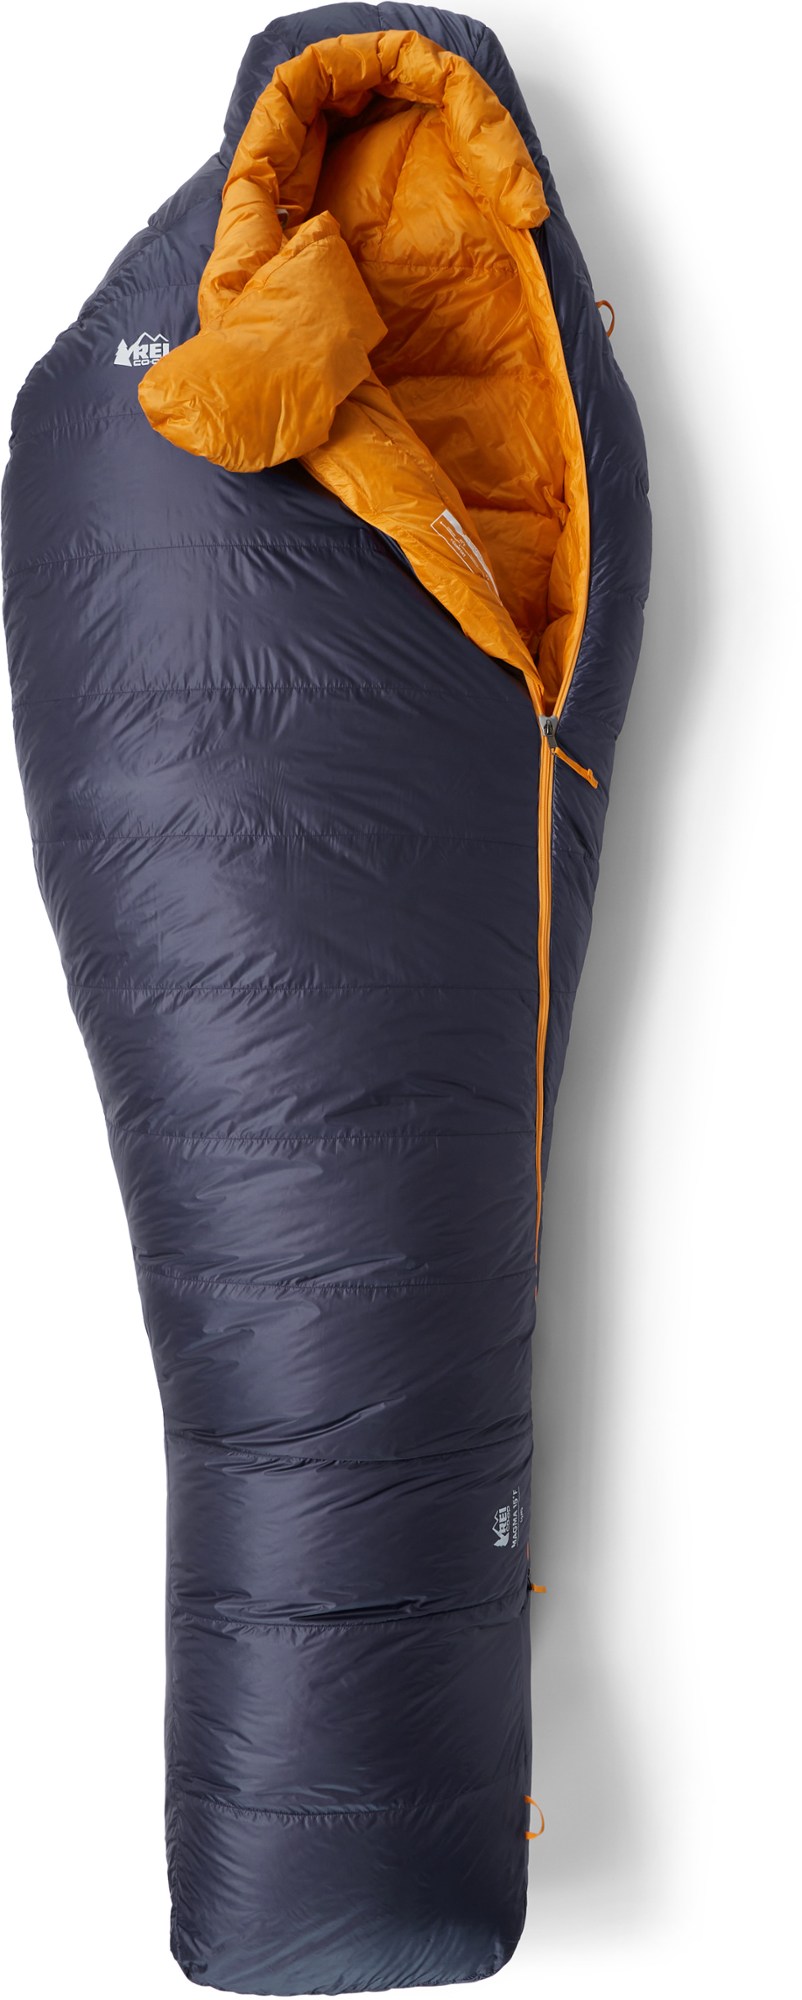 REI Co-op Magma 15 sleeping bag